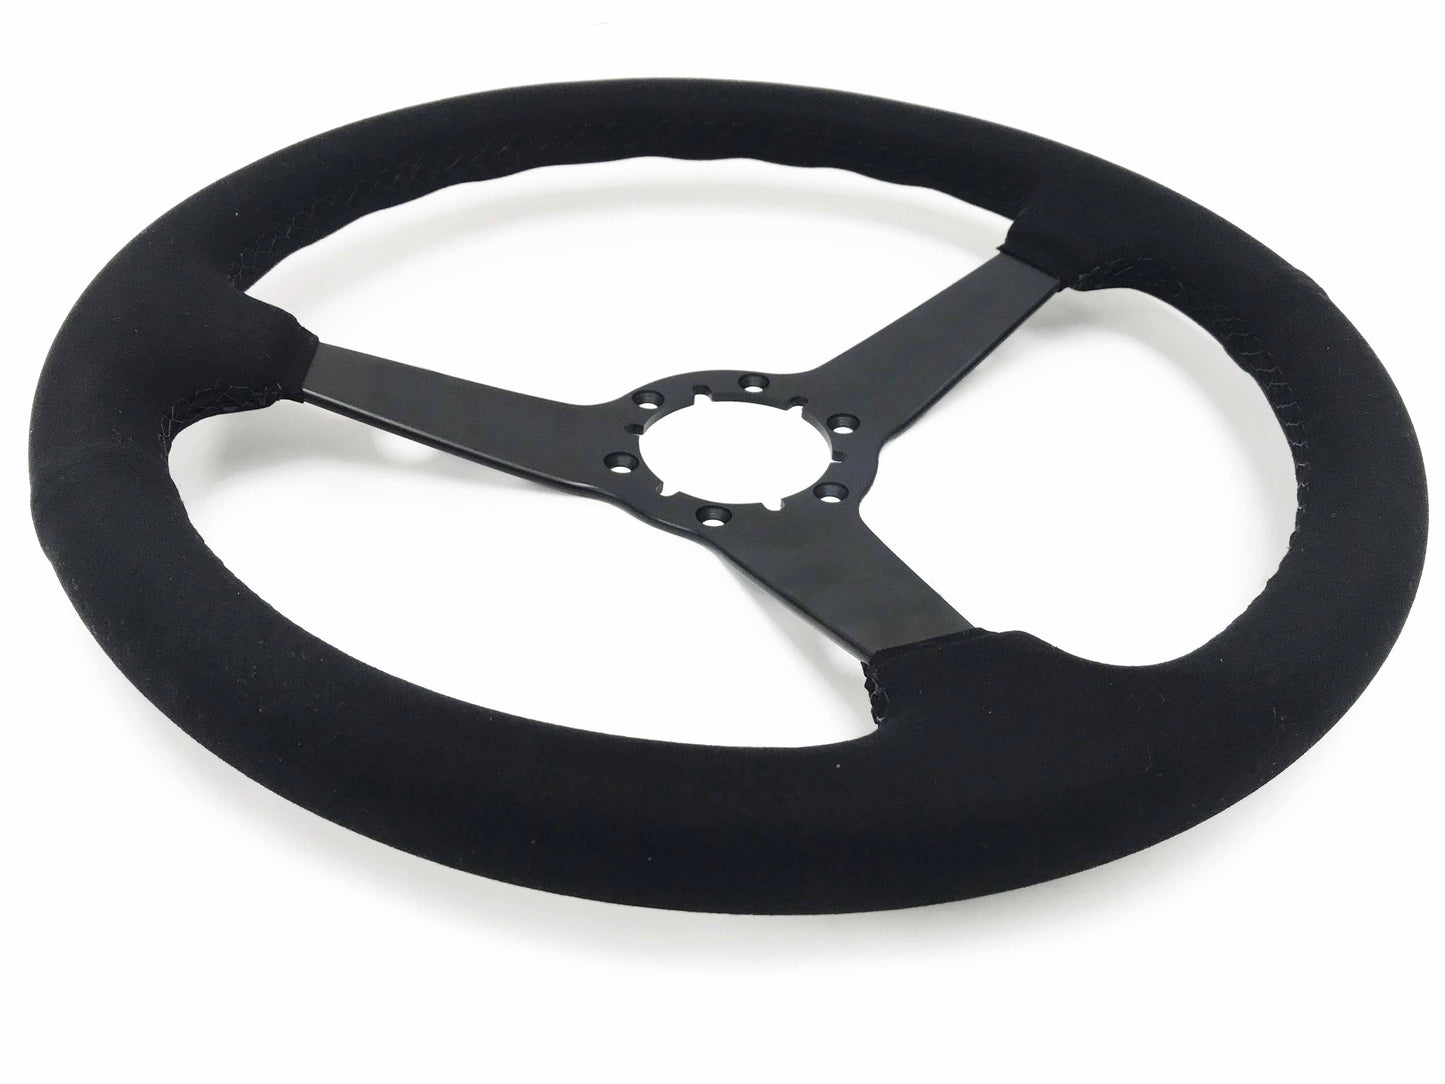 2005+ Toyota Tacoma Steering Wheel Kit | Black Ultralux Suede | ST3582BLK